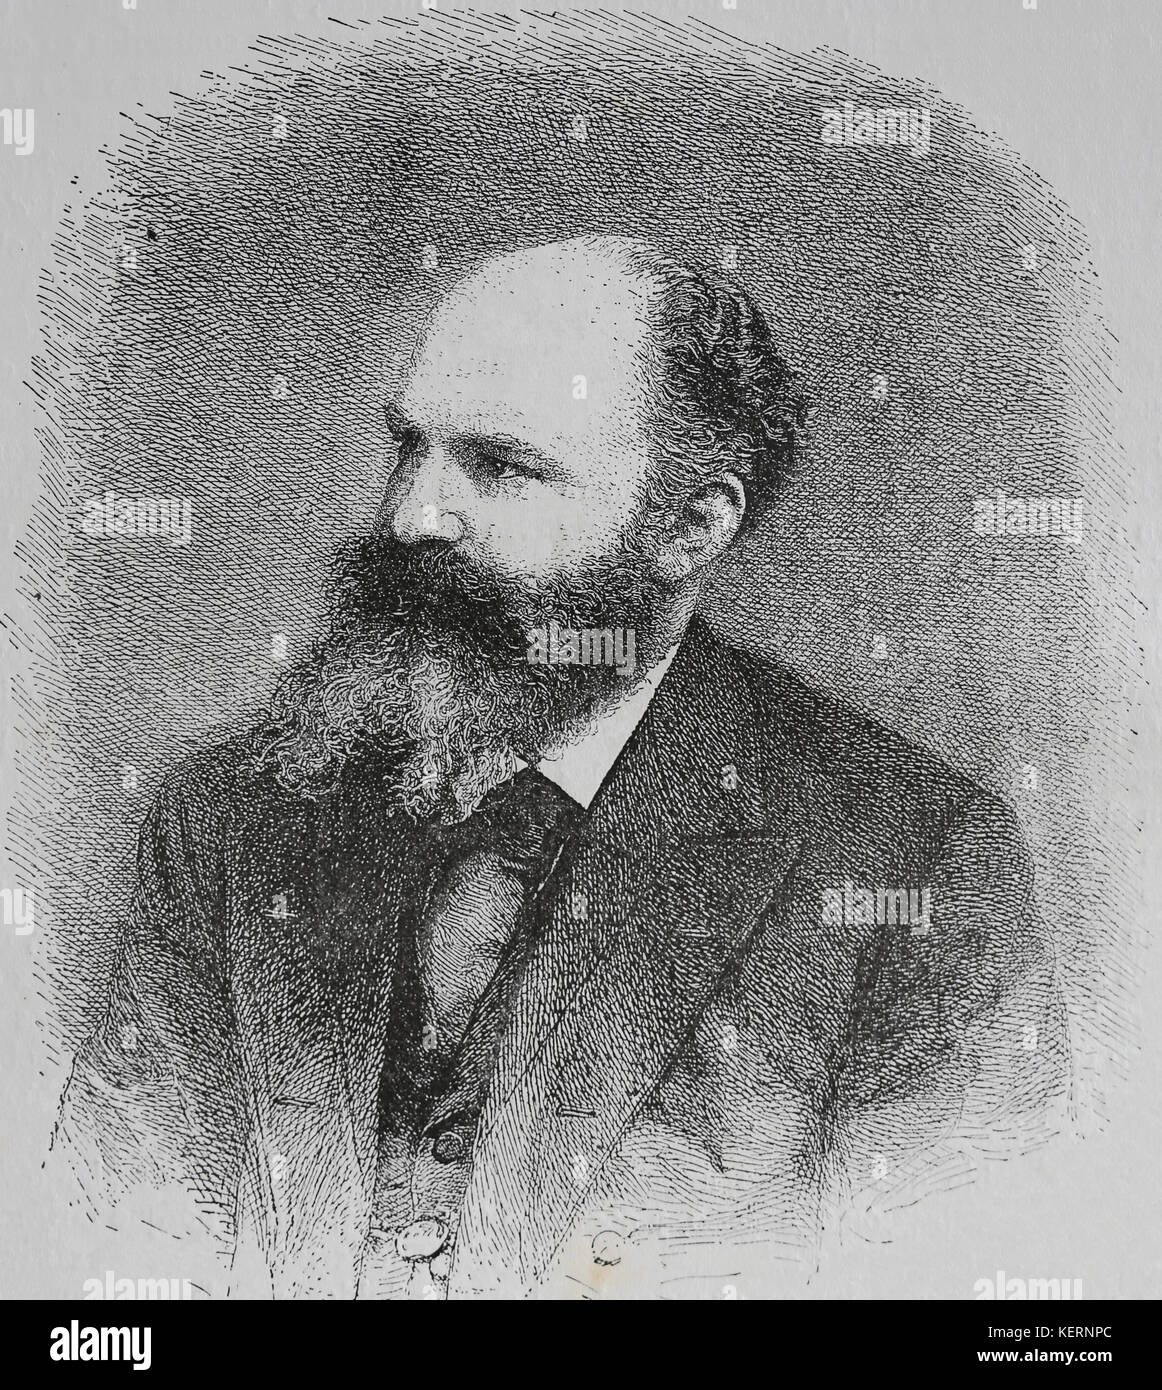 Georg moritz Ebers (1837-1898), deutscher Ägyptologe und Romanautor. Gravur. nuestro Siglo, 1883, Barcelona, Spanien. Stockfoto